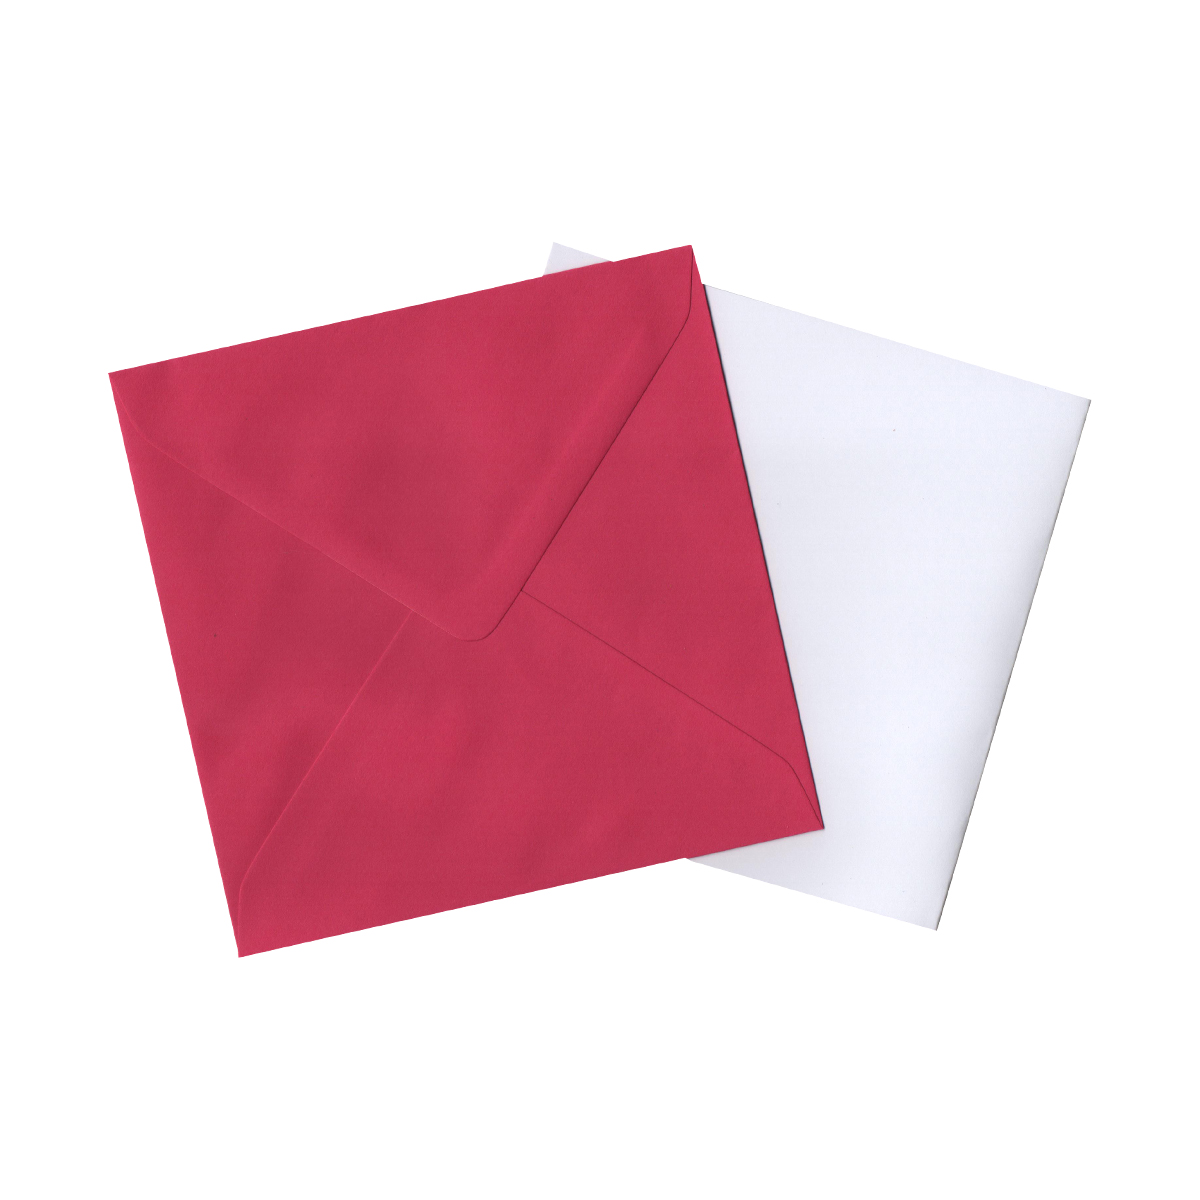 155mm Square Fuchsia Pink Envelopes & White Card Blanks (Pack of 10)